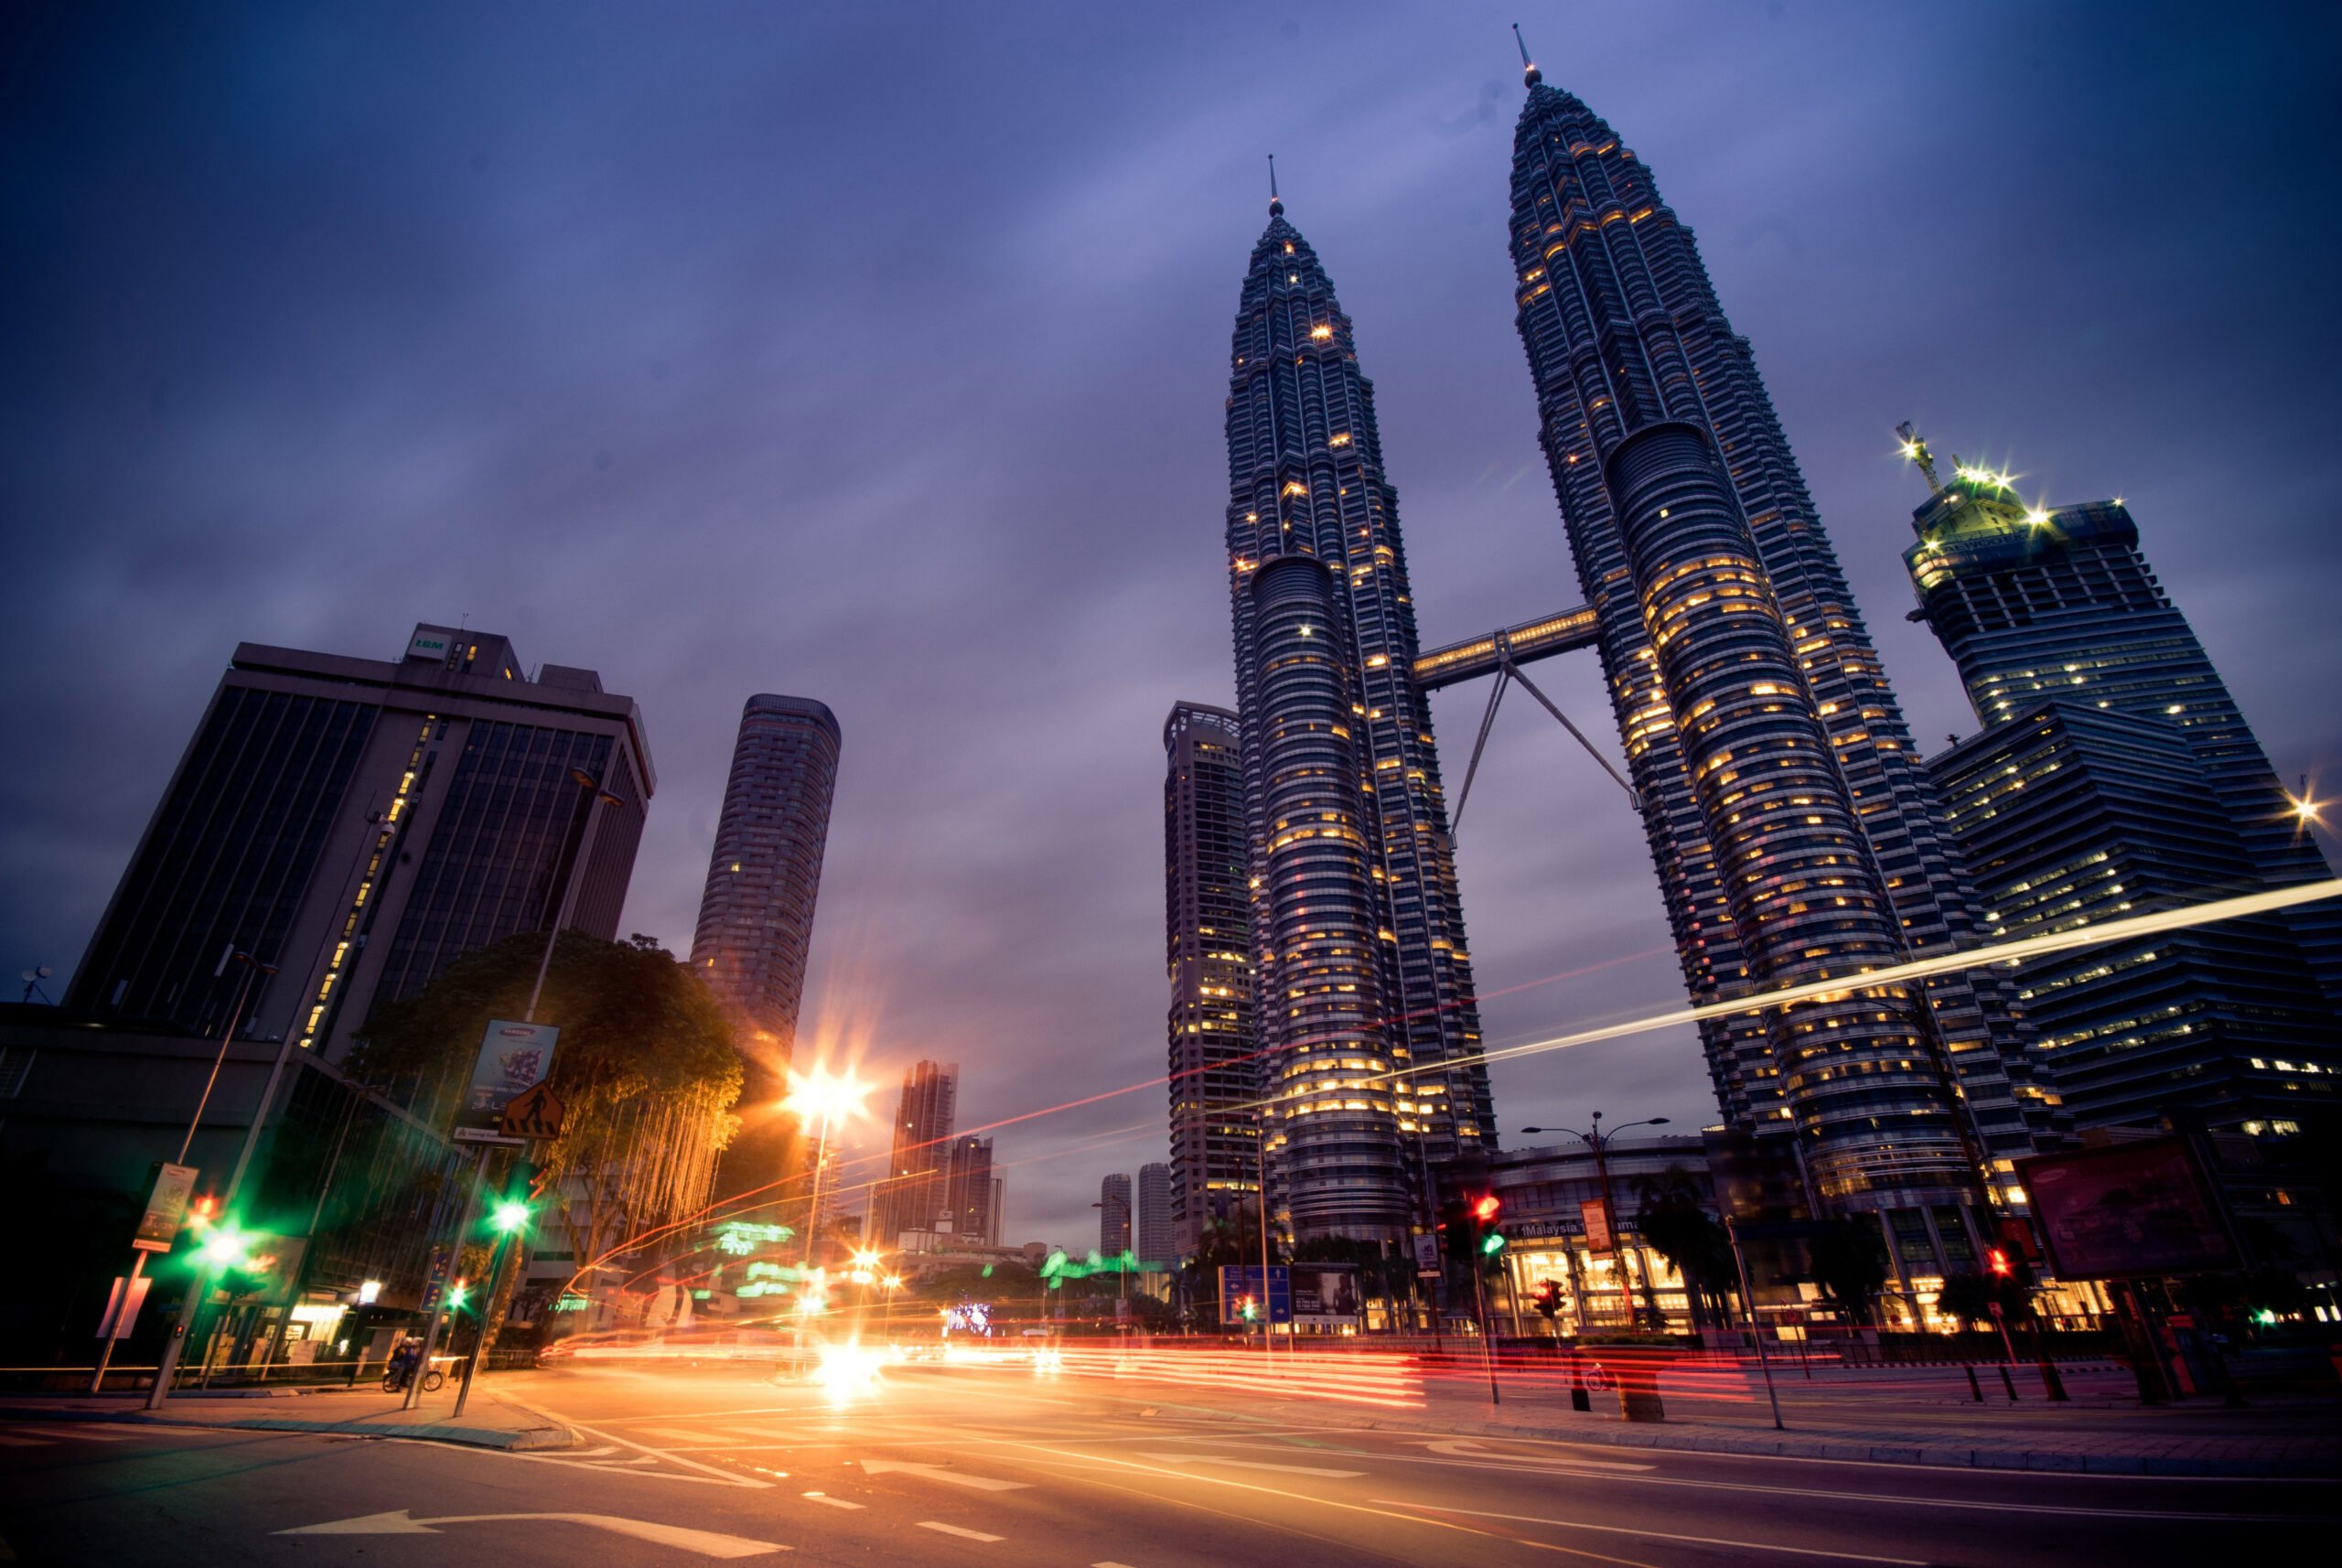 Kuala Lumpur Petronas Towers - CC0 / Public Domain - Things to do in Kuala Lumpur